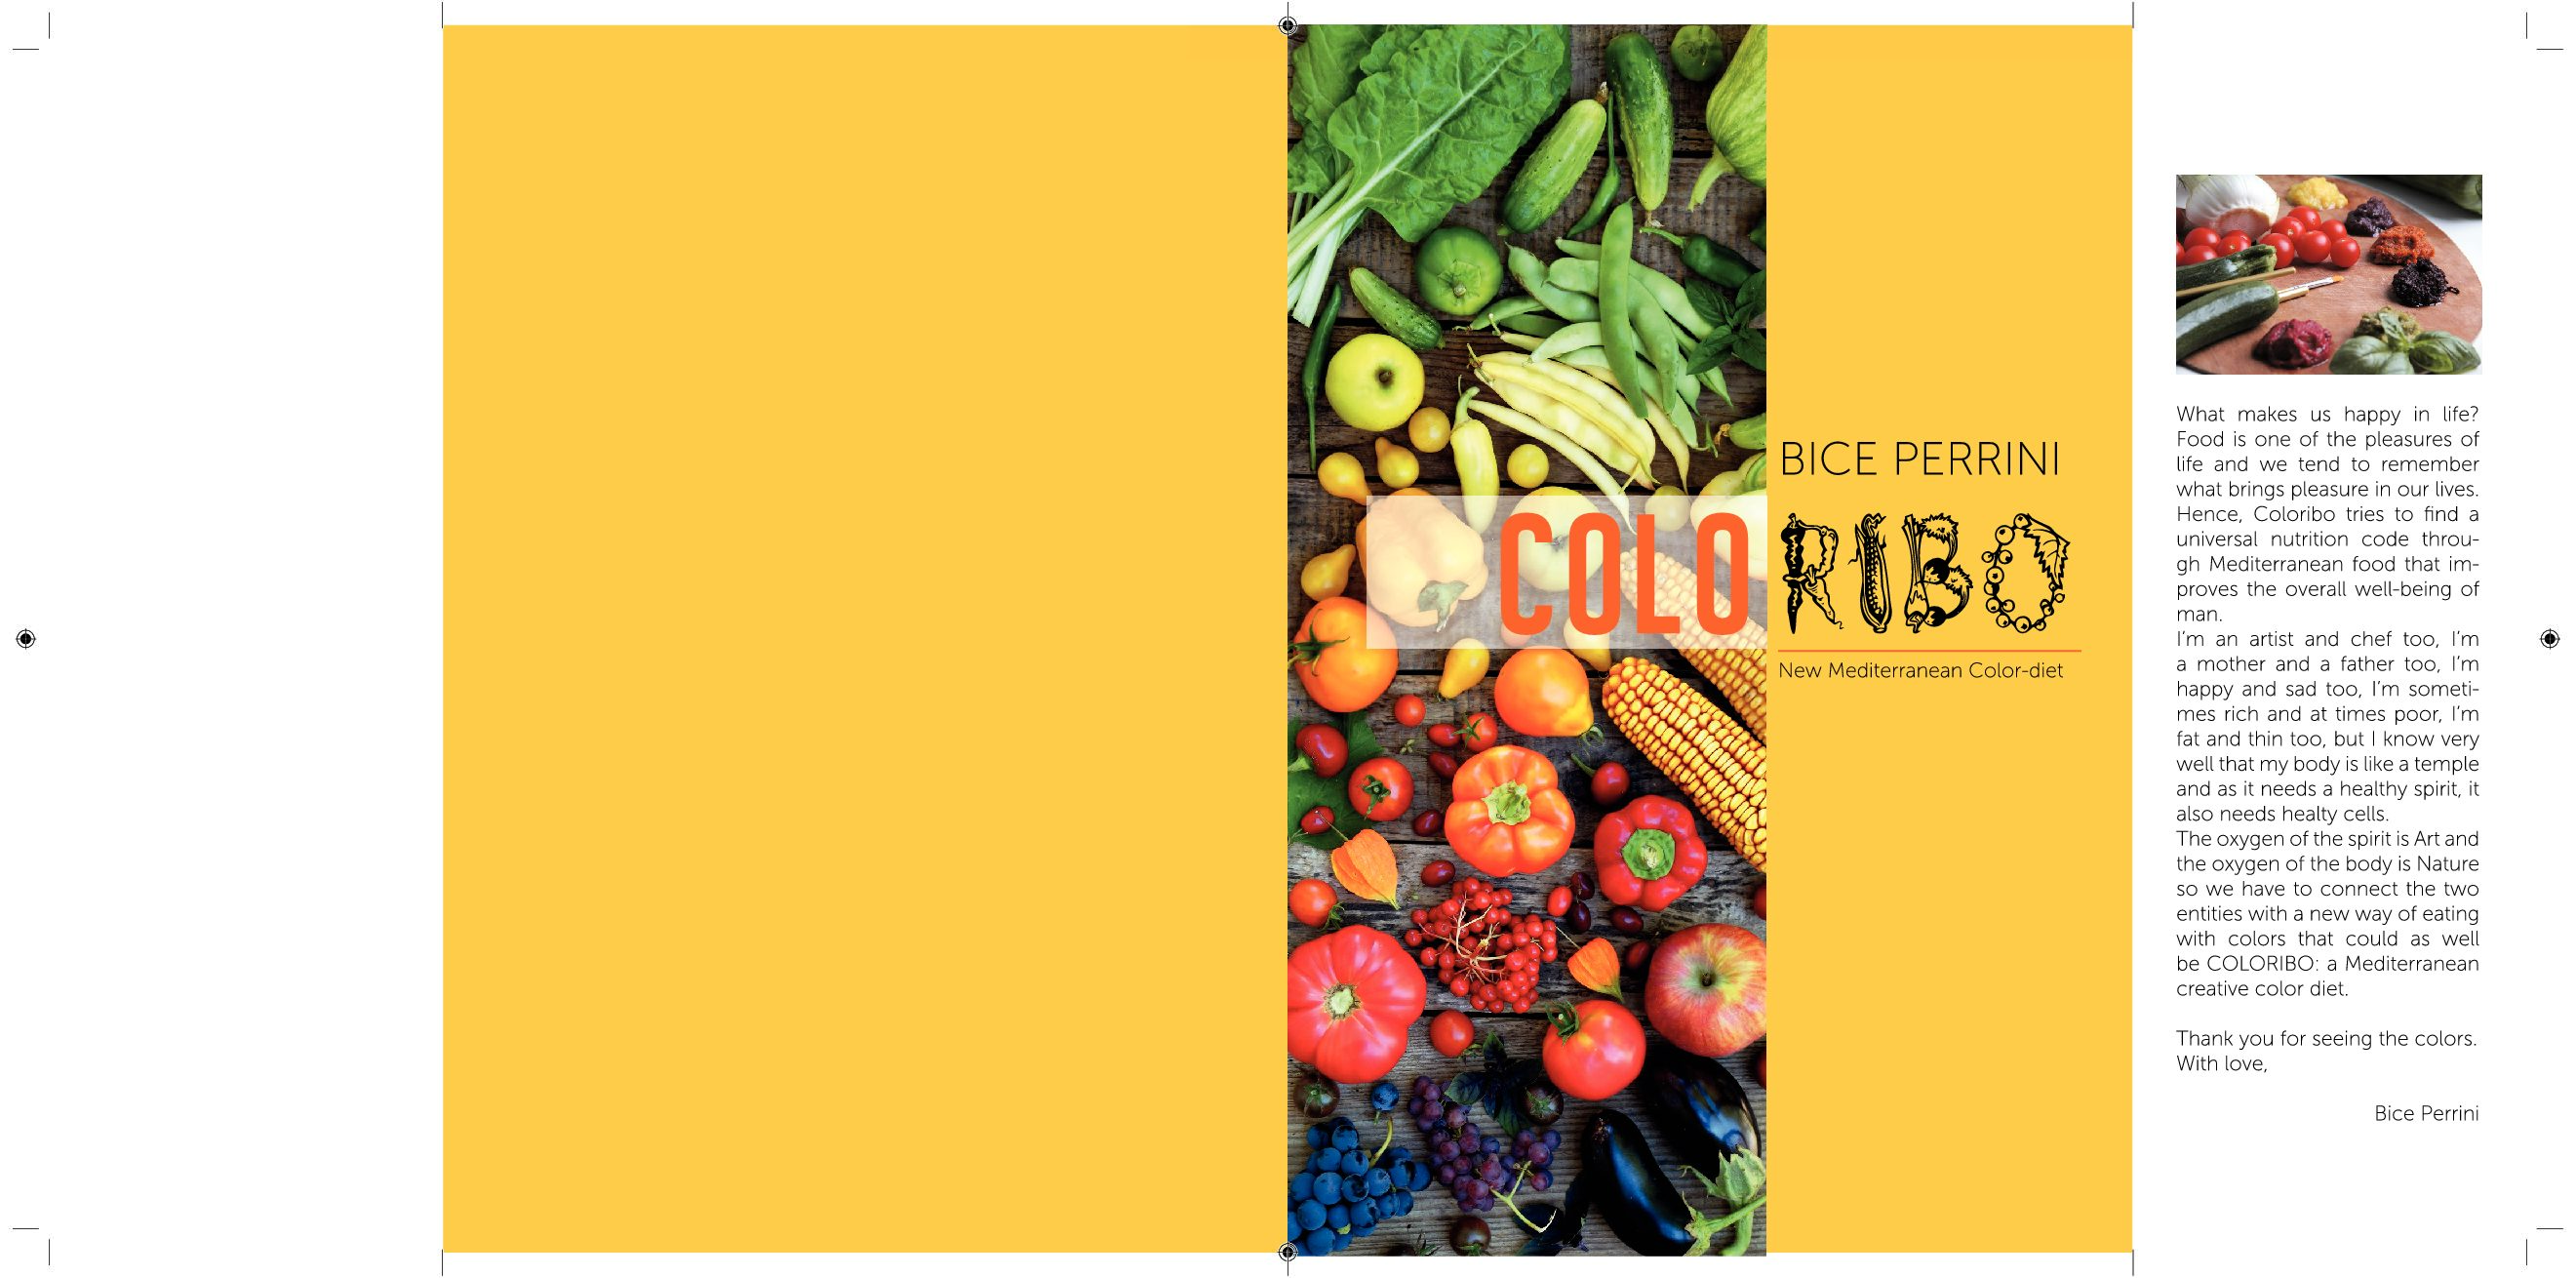 Coloribo book: New Mediterranean Color-diet